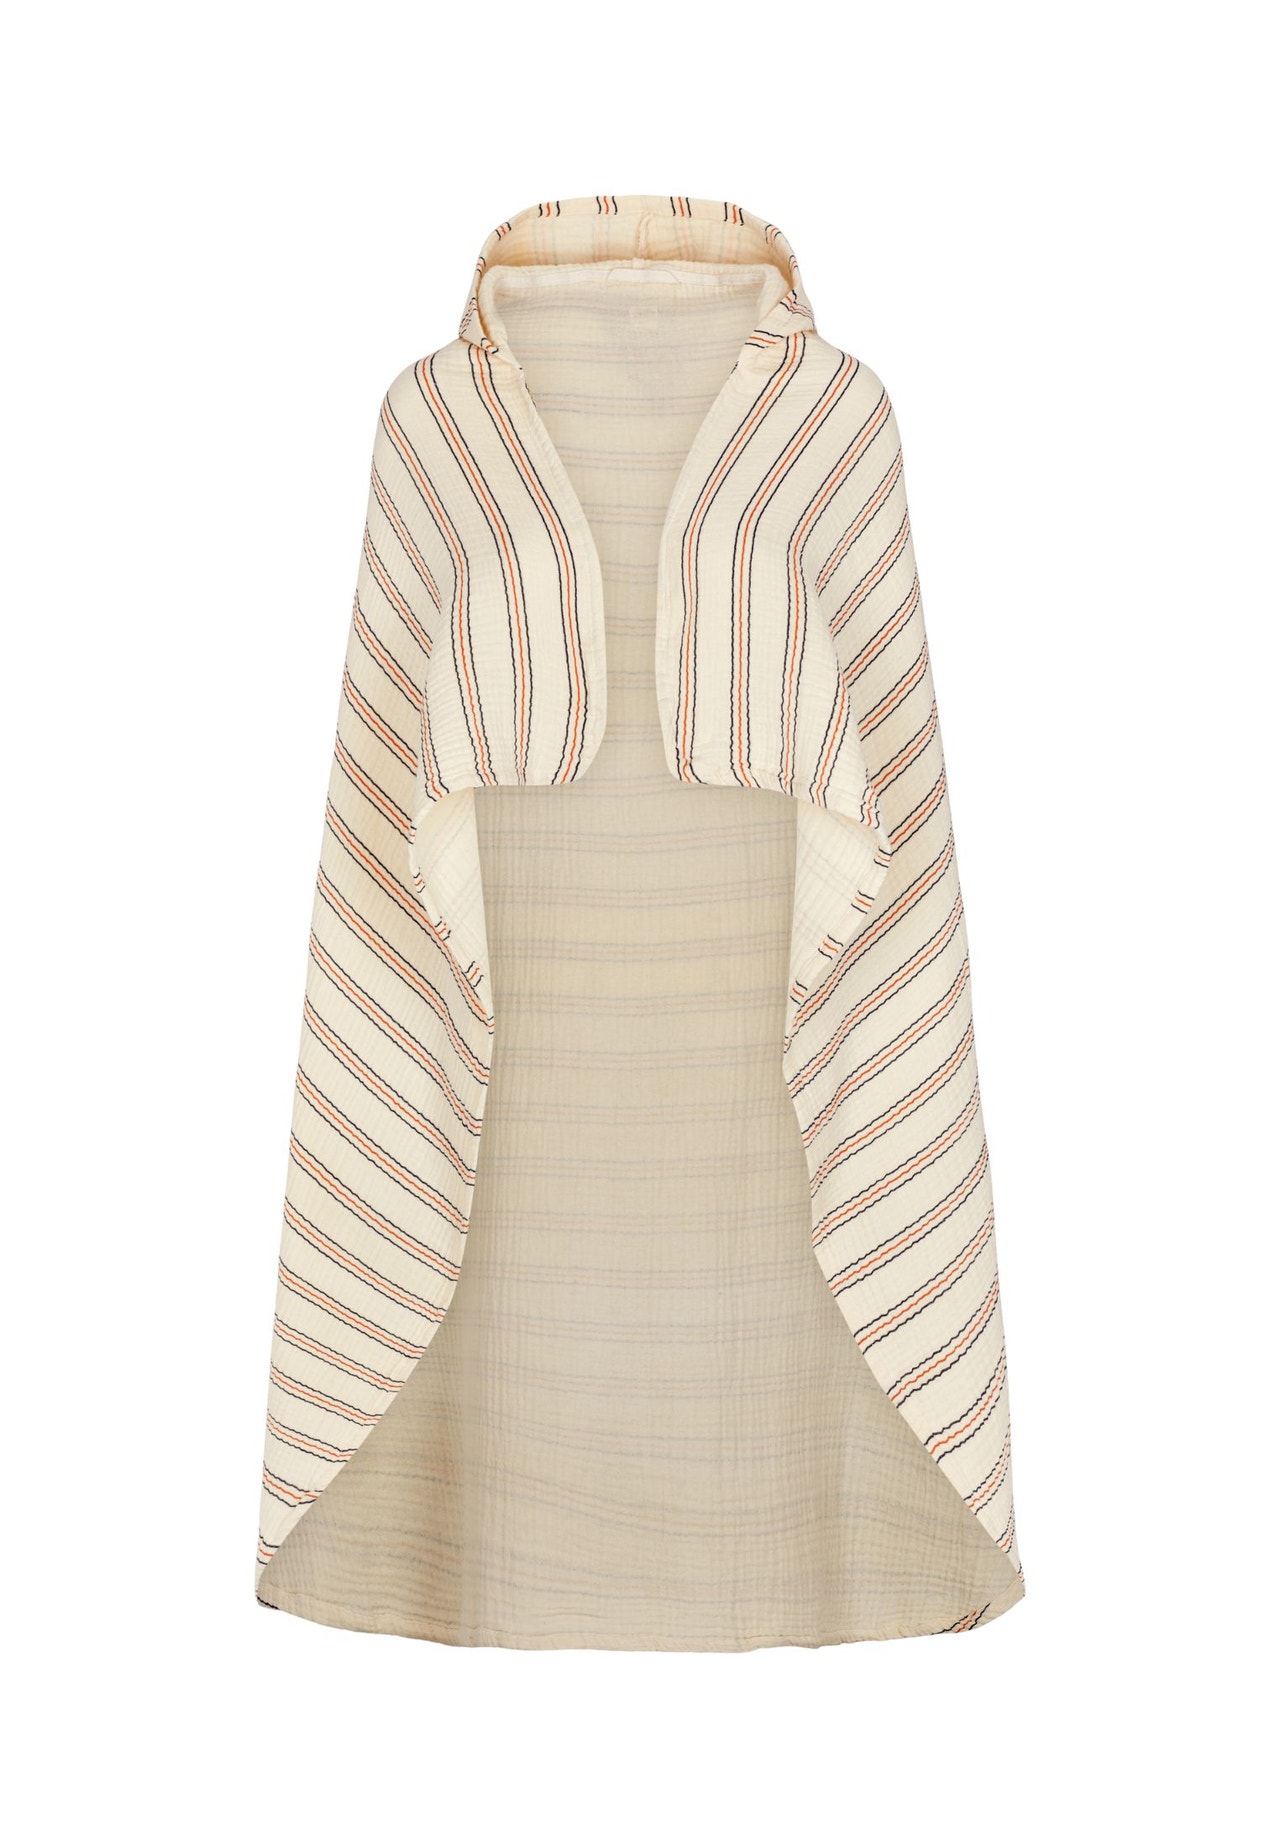 MAMA.LICIOUS vacvac HUGO hooded towel -Seed Pearl stripes - 99999976